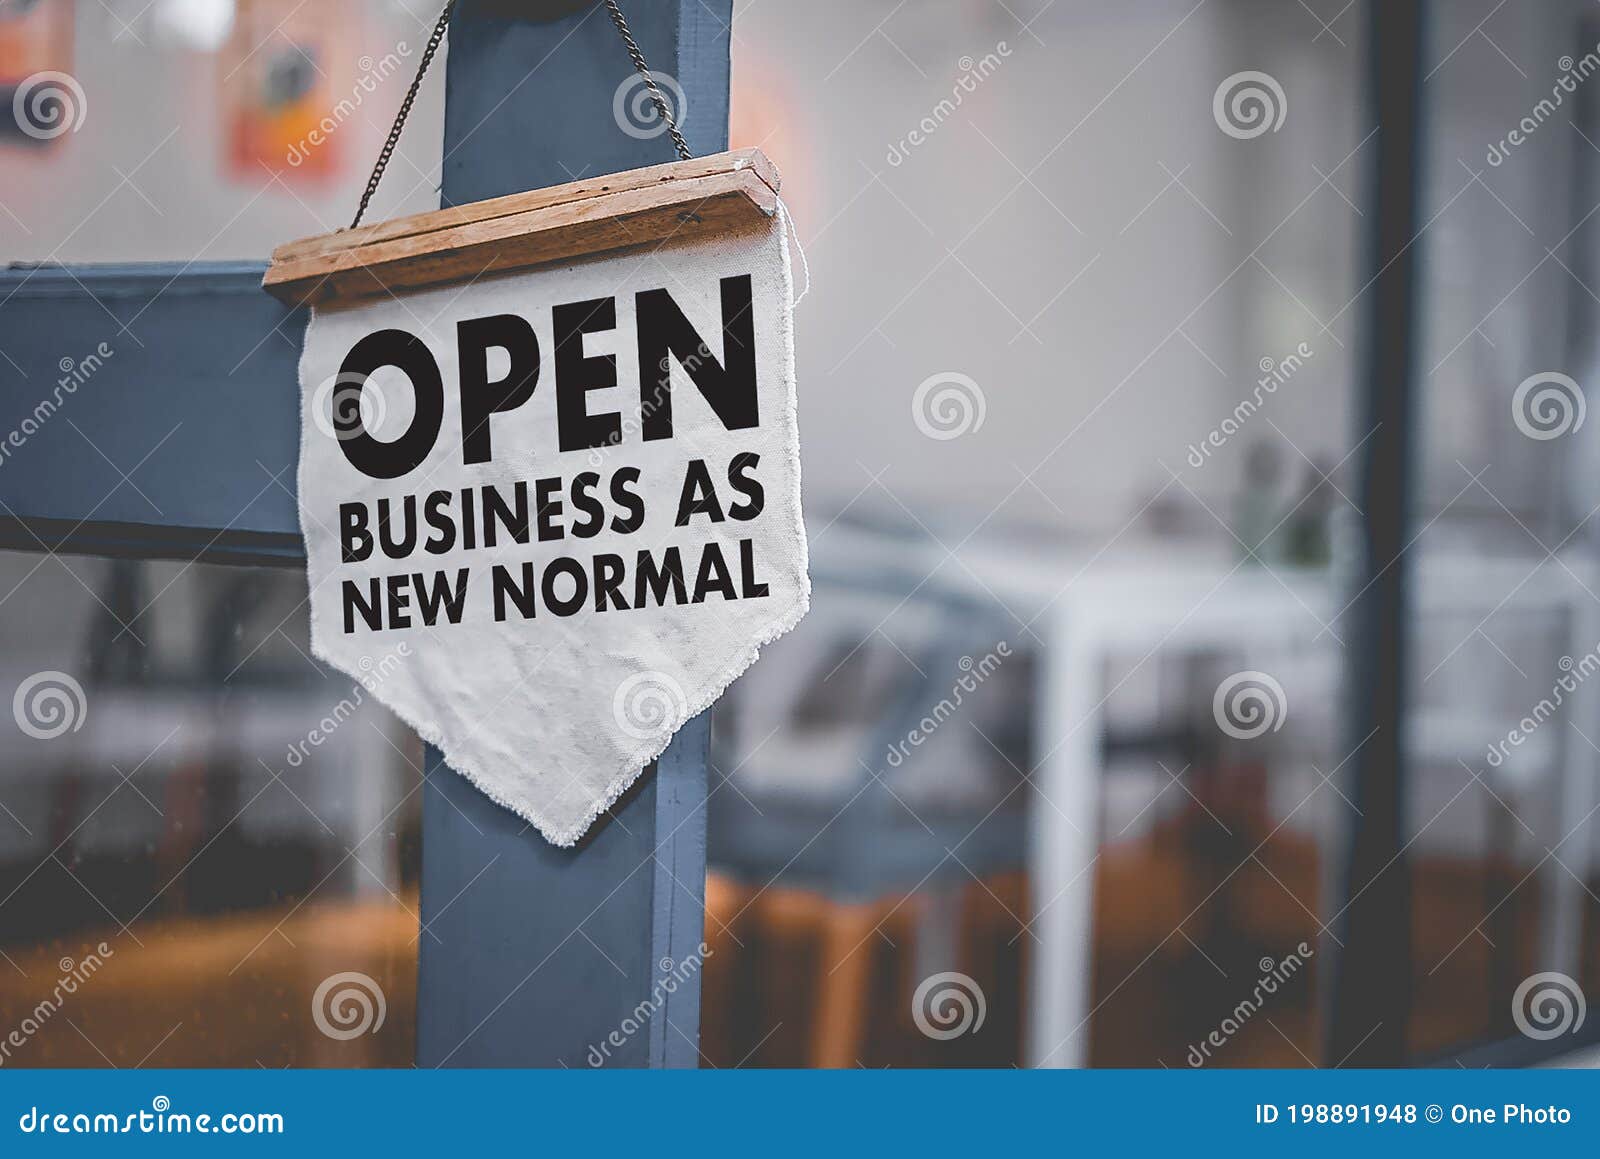 open business as new normal  start new normal in the novel coronavirus covid-19